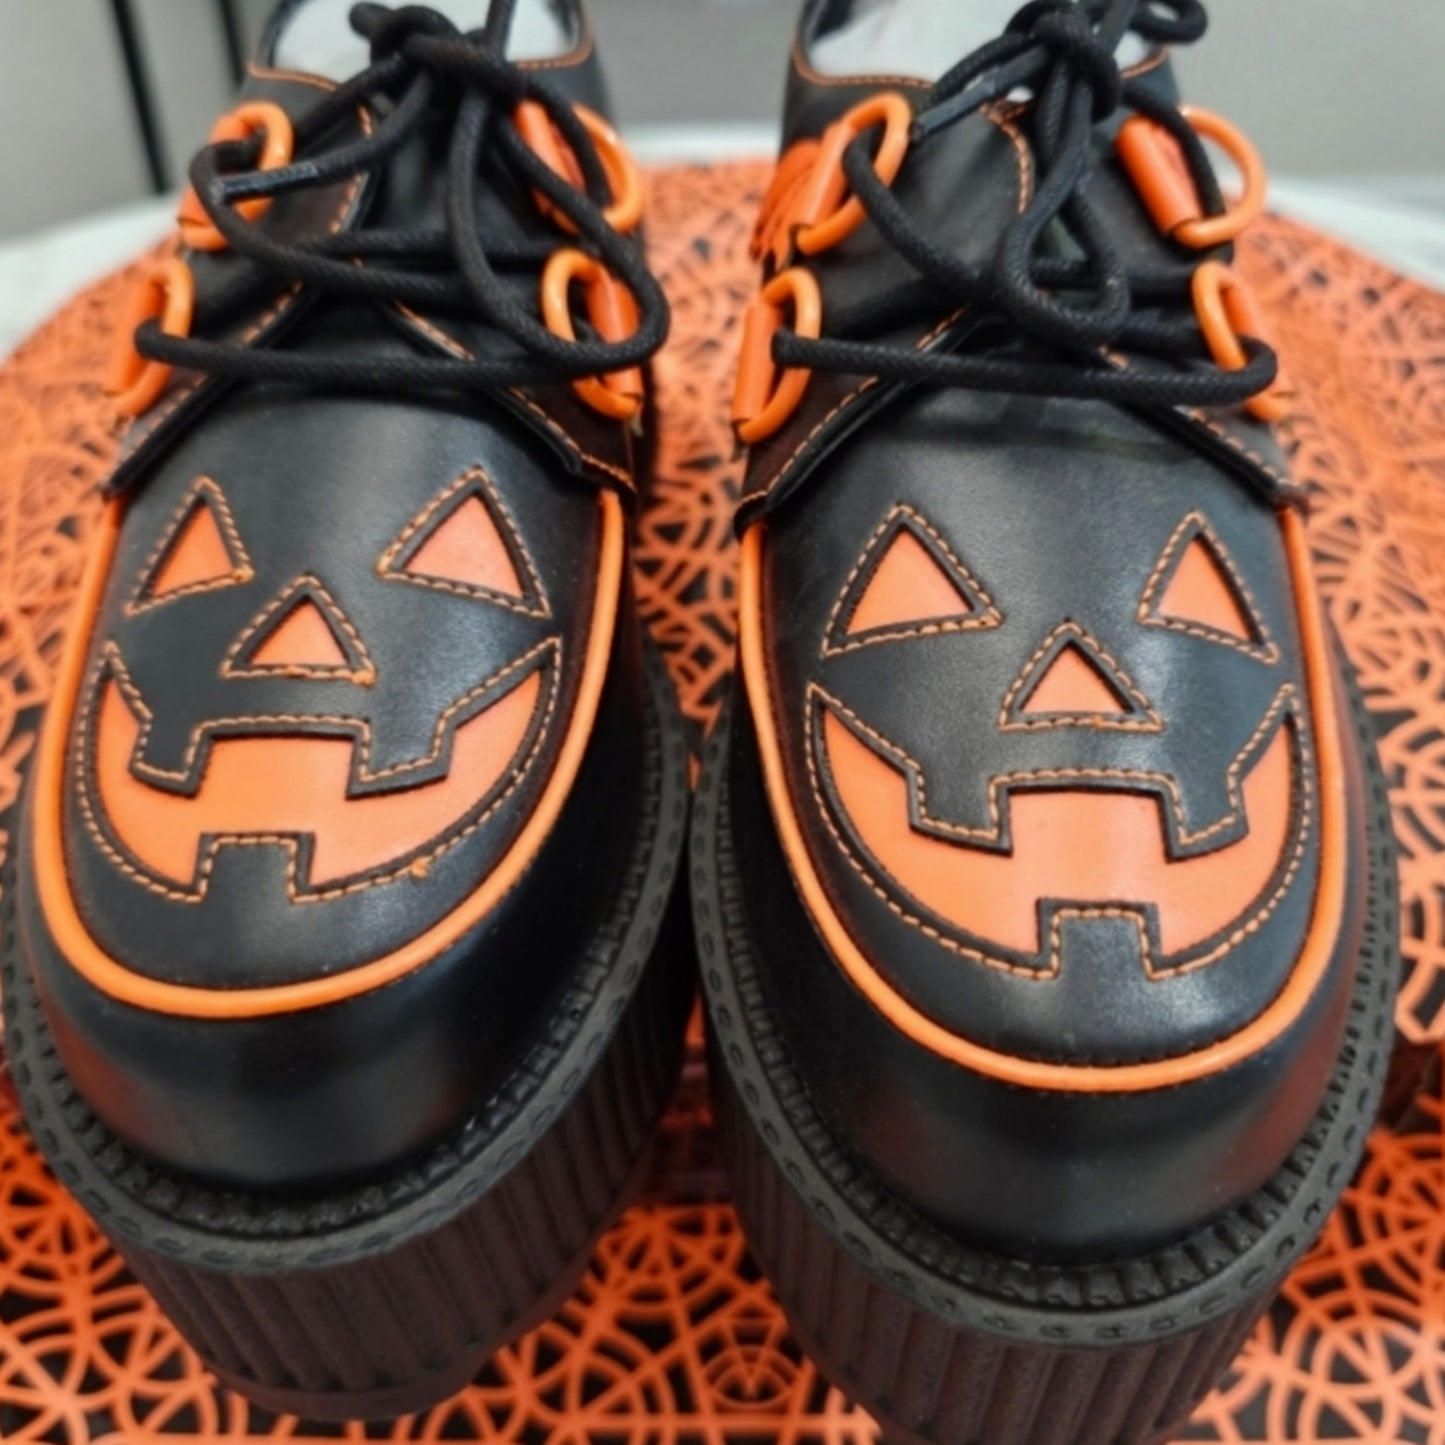 Halloween Edition Platforms | Super Creep Low Jack | Black Orange - Strangecvlt - Shoes